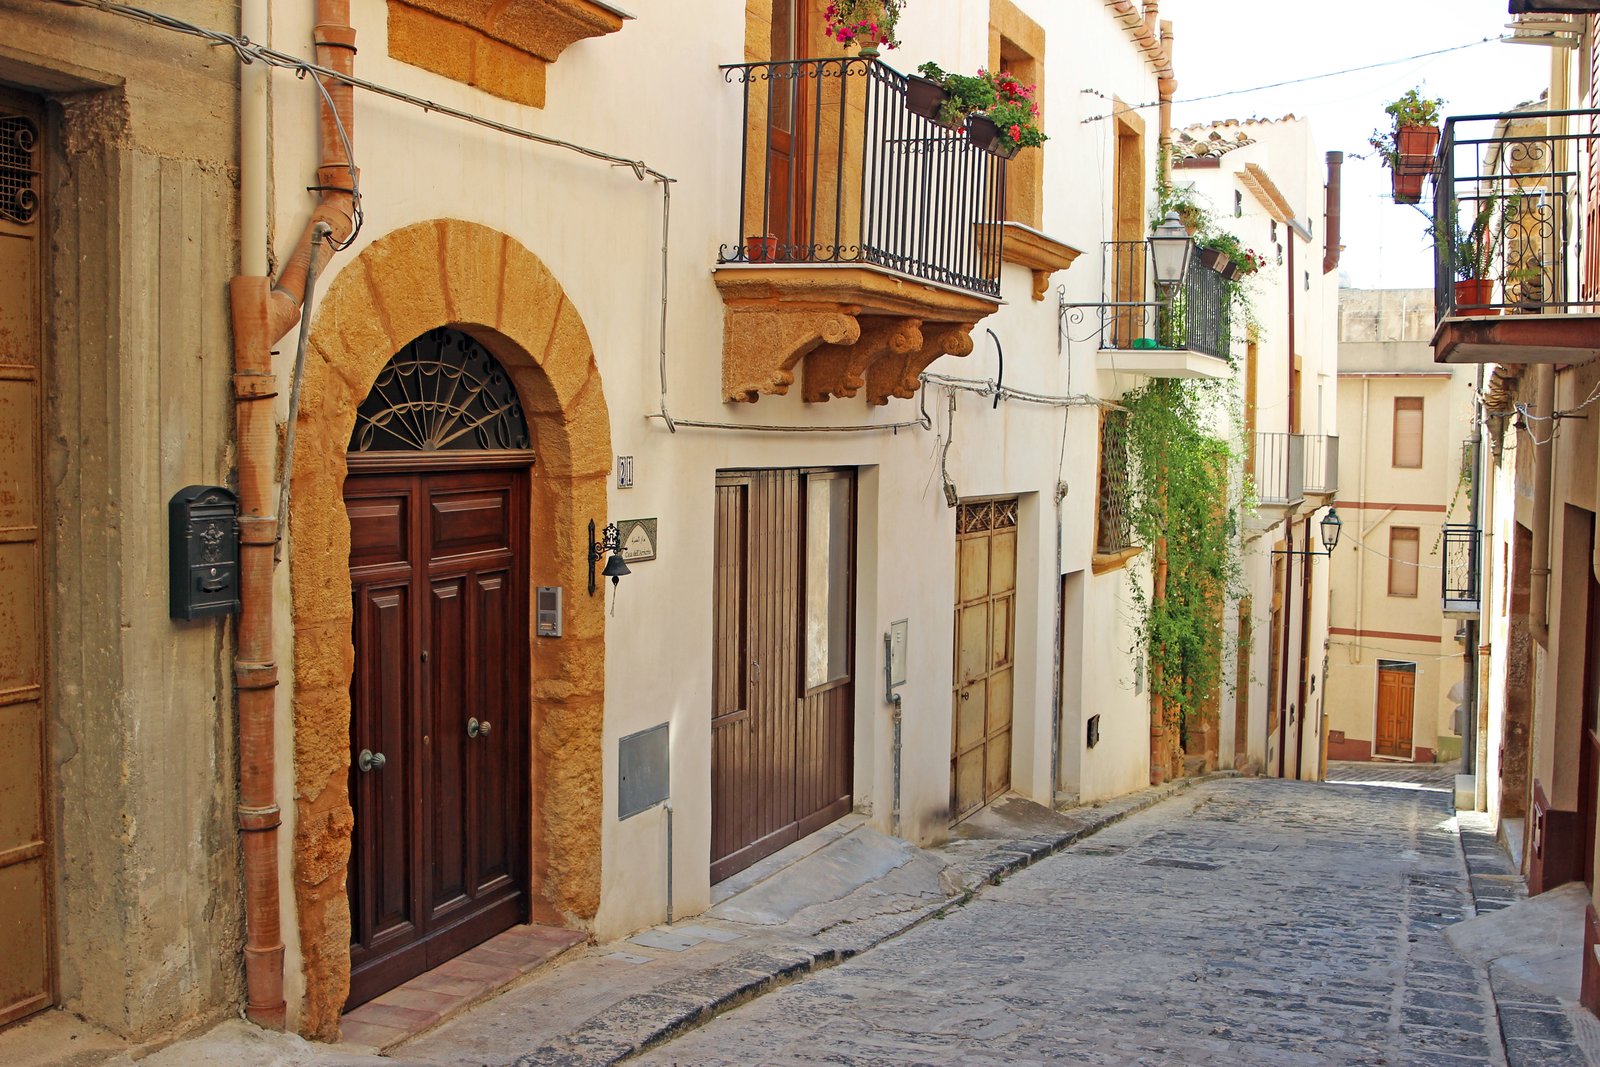 Make your wanderlust dreams come true Pristine homes in Sicily, Italy